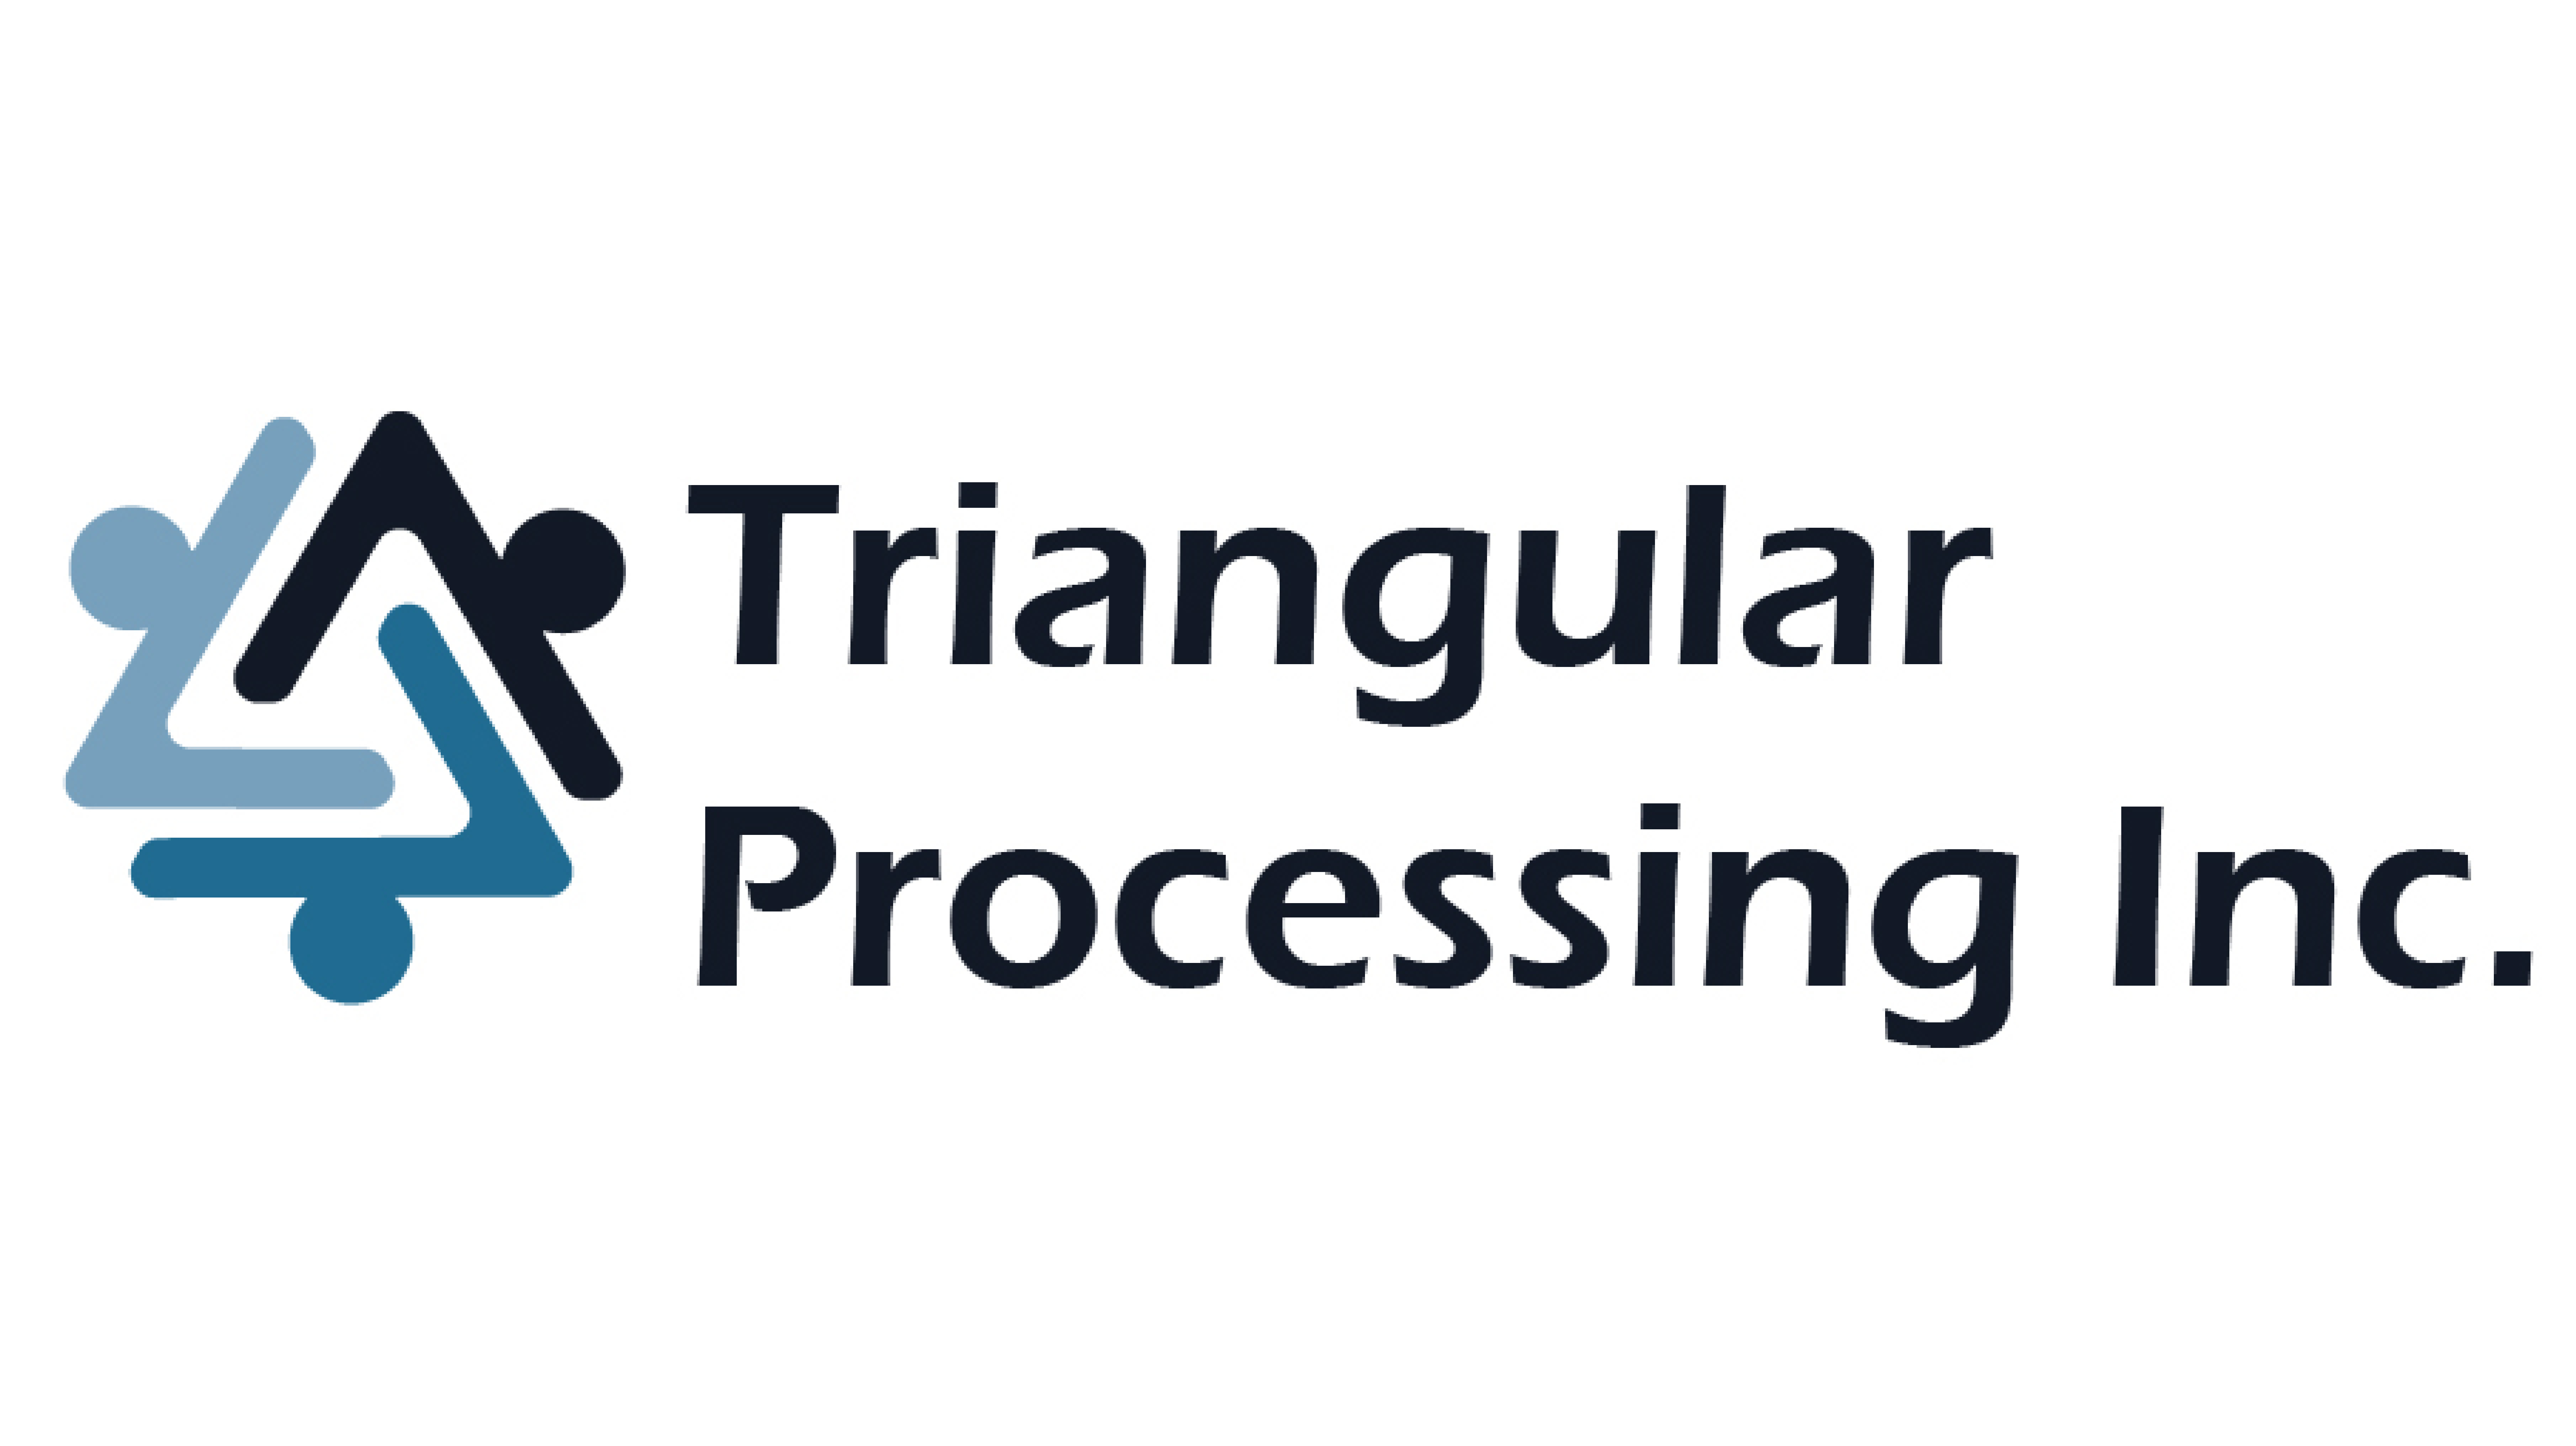 Triangular Processing